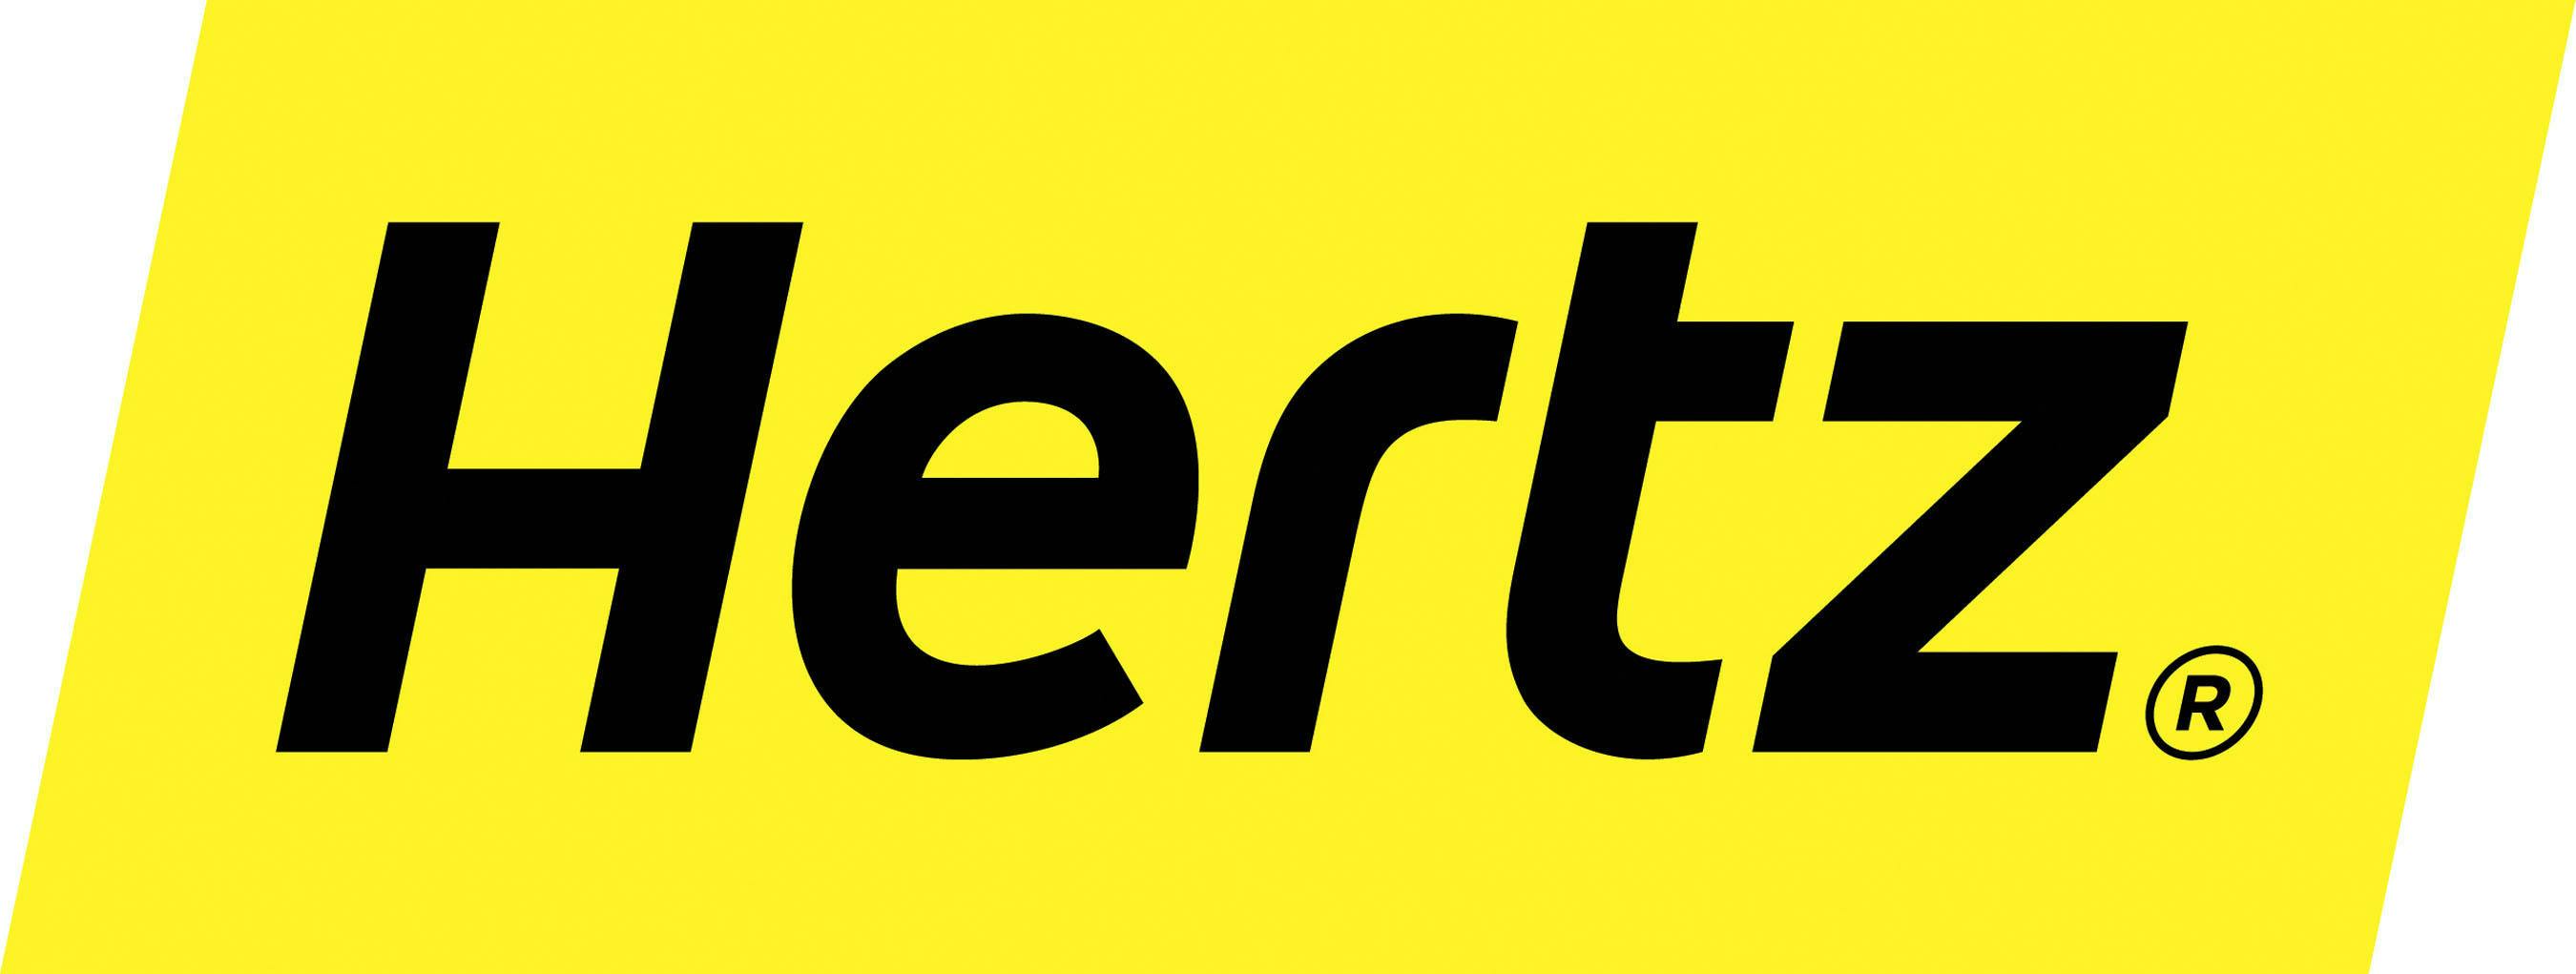 Hertz Equipment Rental Names Dressel COO | Construction News